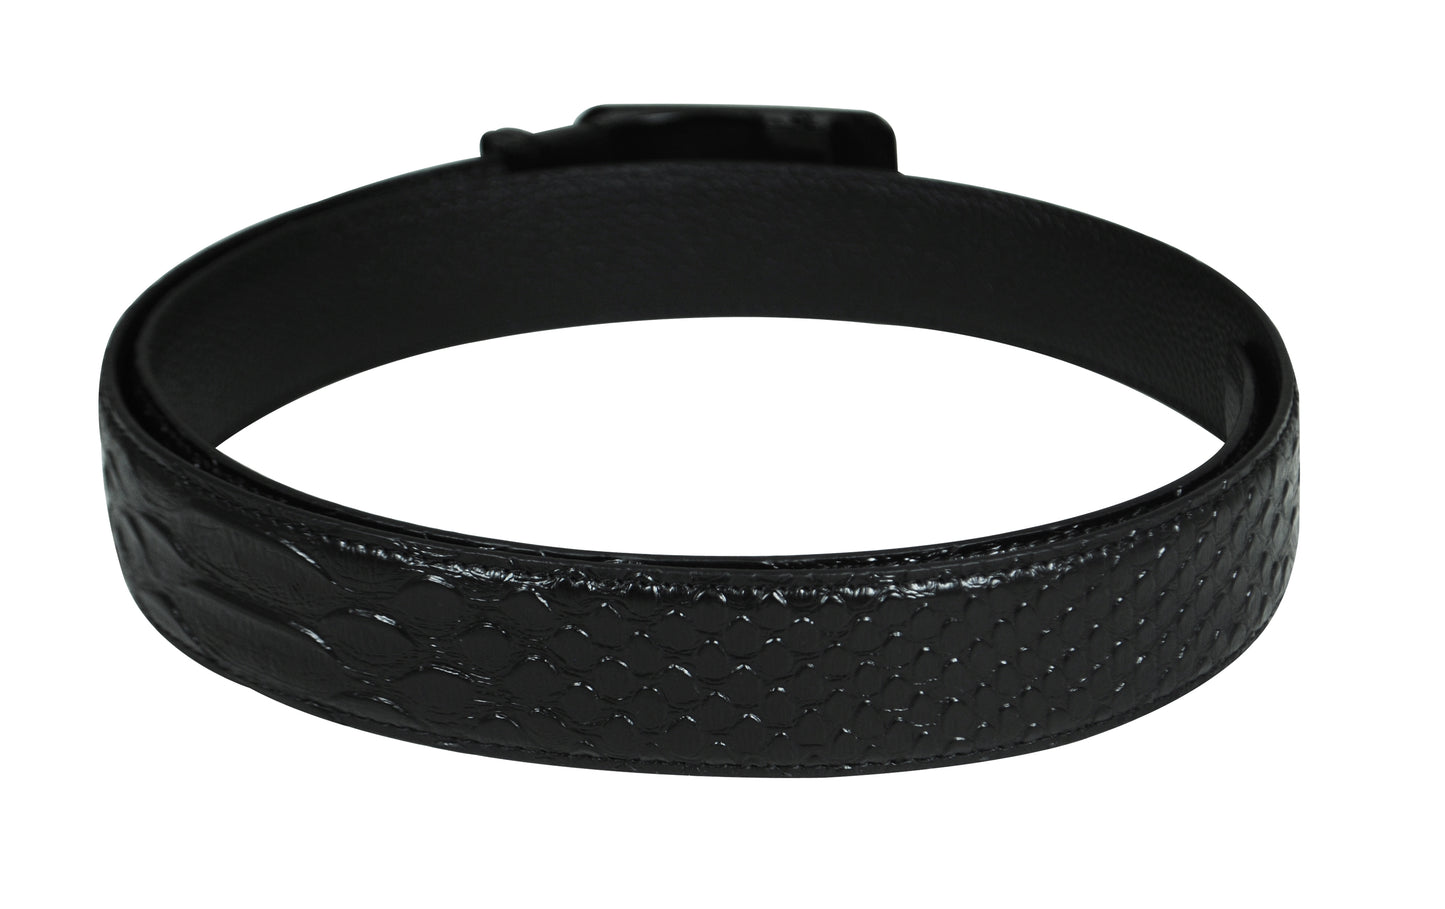 Calfnero Genuine Leather Men's Belt (CB-01-Black)